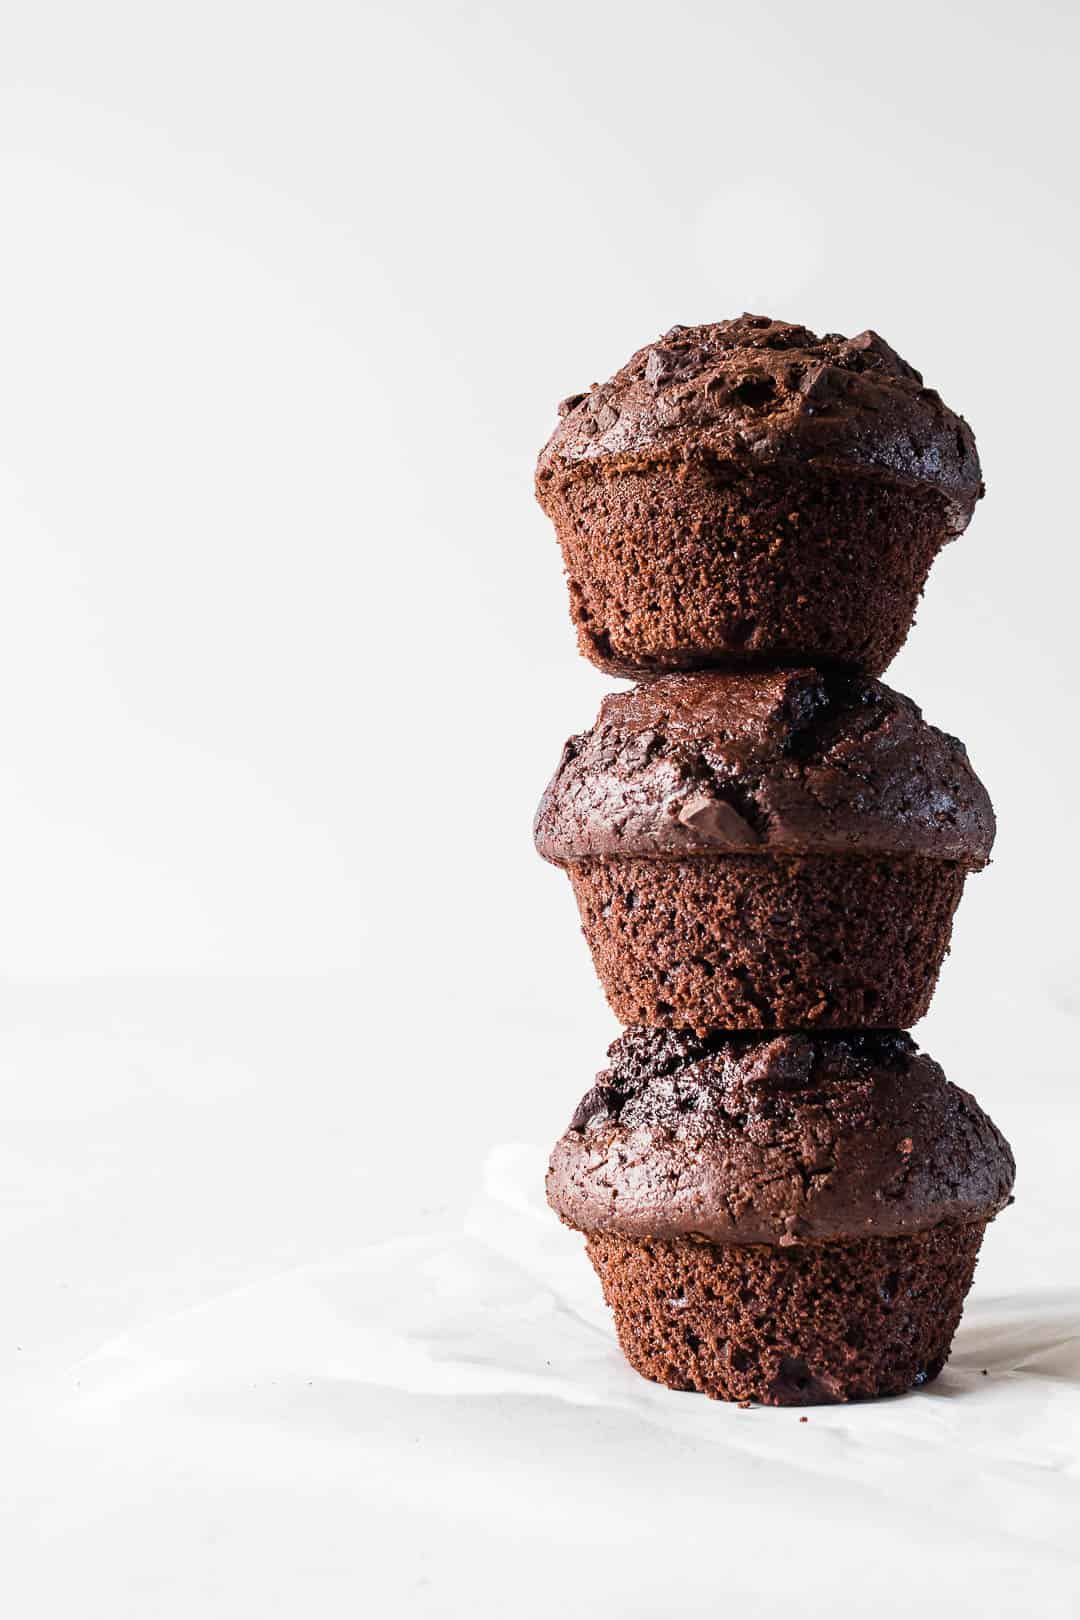 Chokolademuffins - opskrift på muffins med chokolade